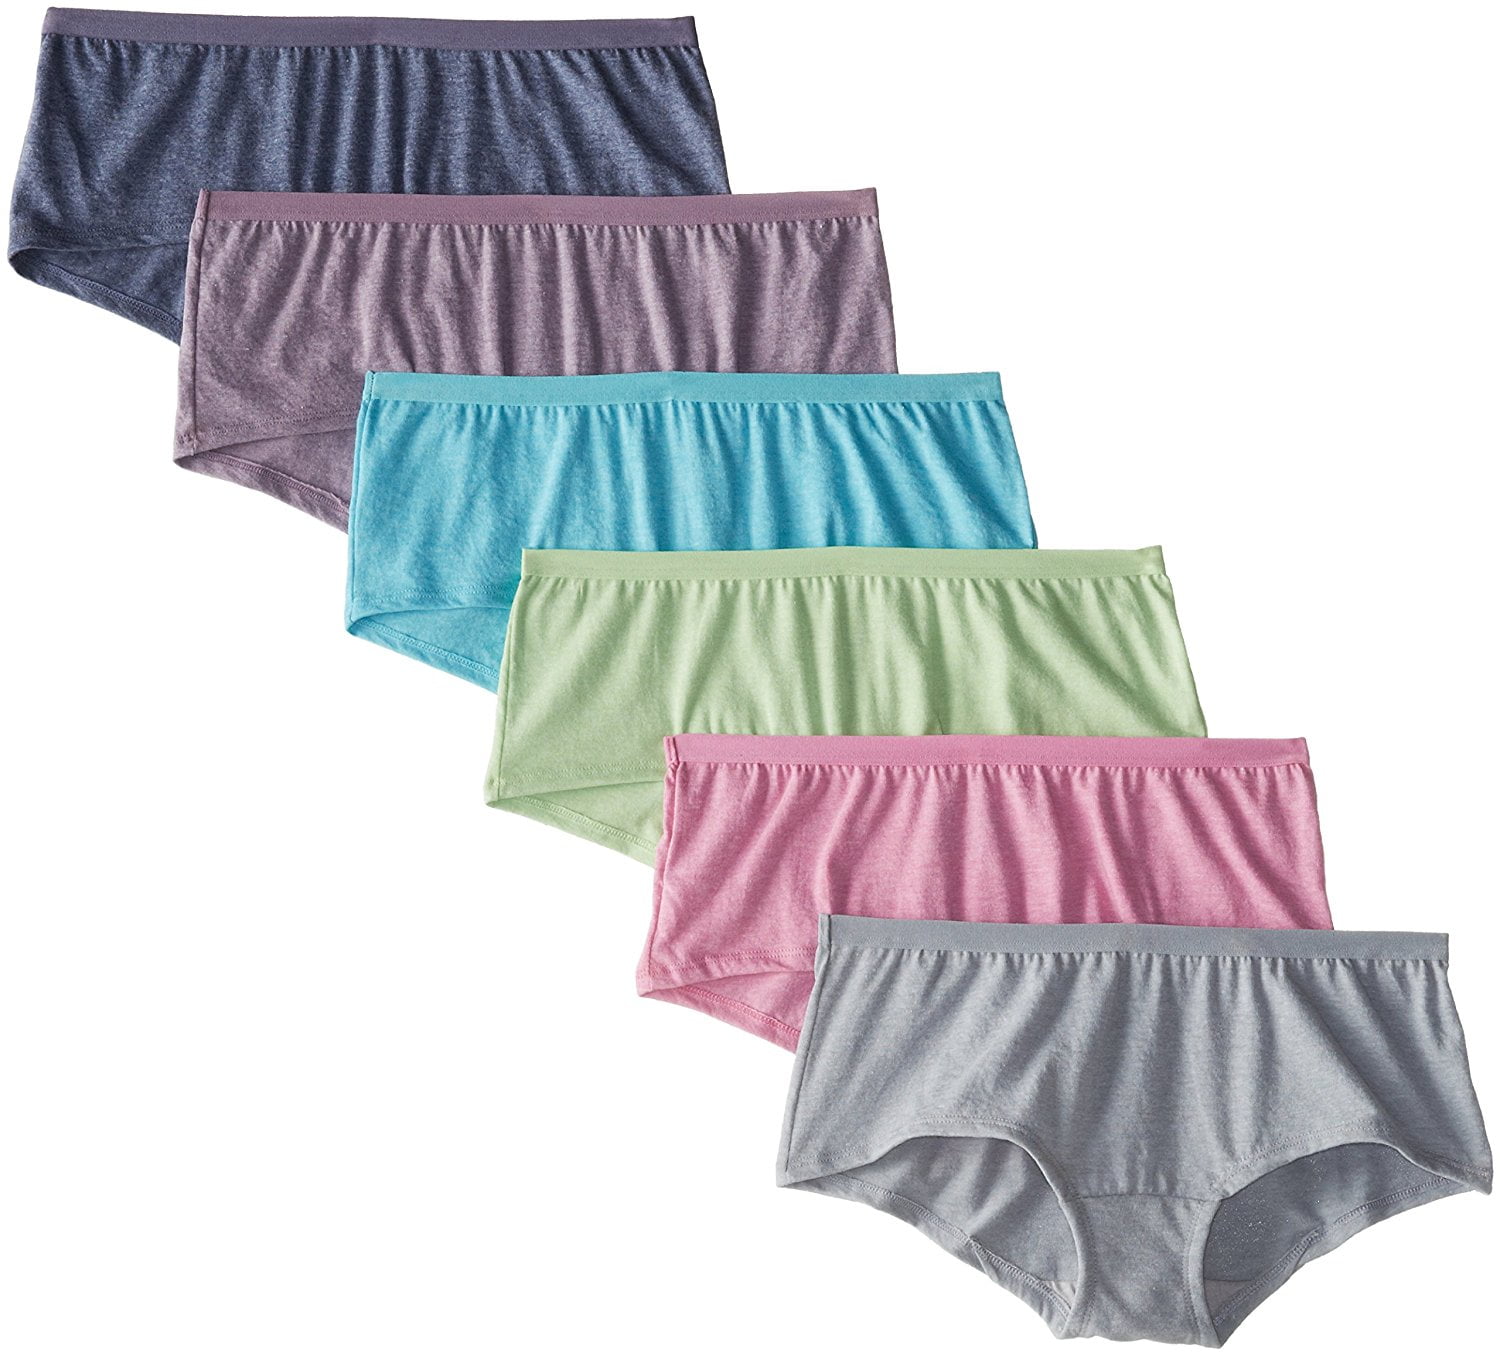 Fruit of the Loom Womens Cotton Blend Boy Short Underwear Panties Pack of 14 